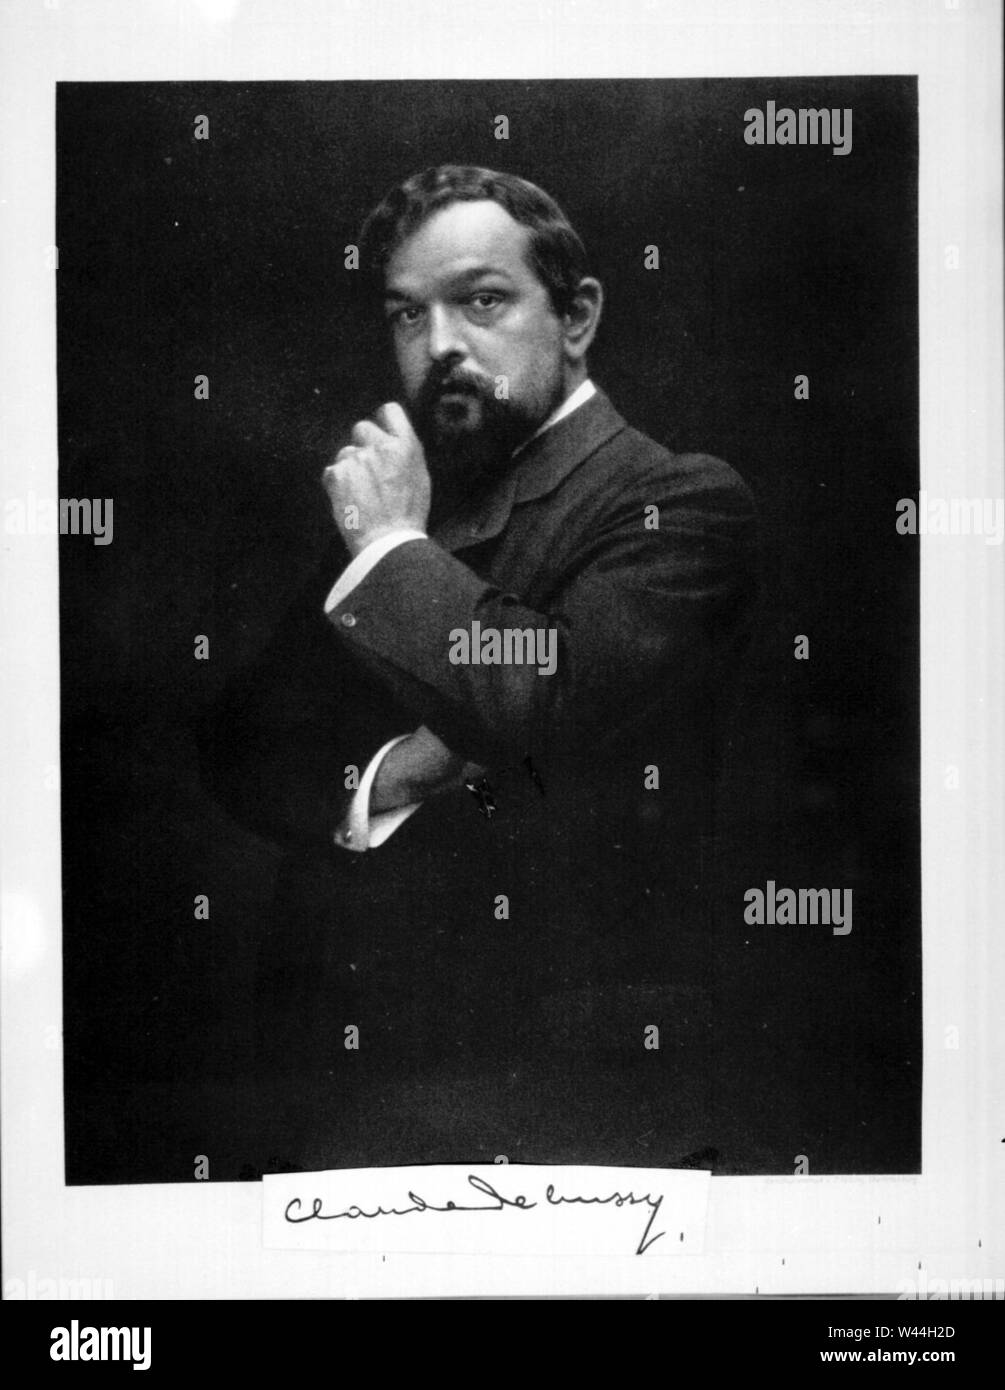 Claude Debussy portrait Stock Photo - Alamy